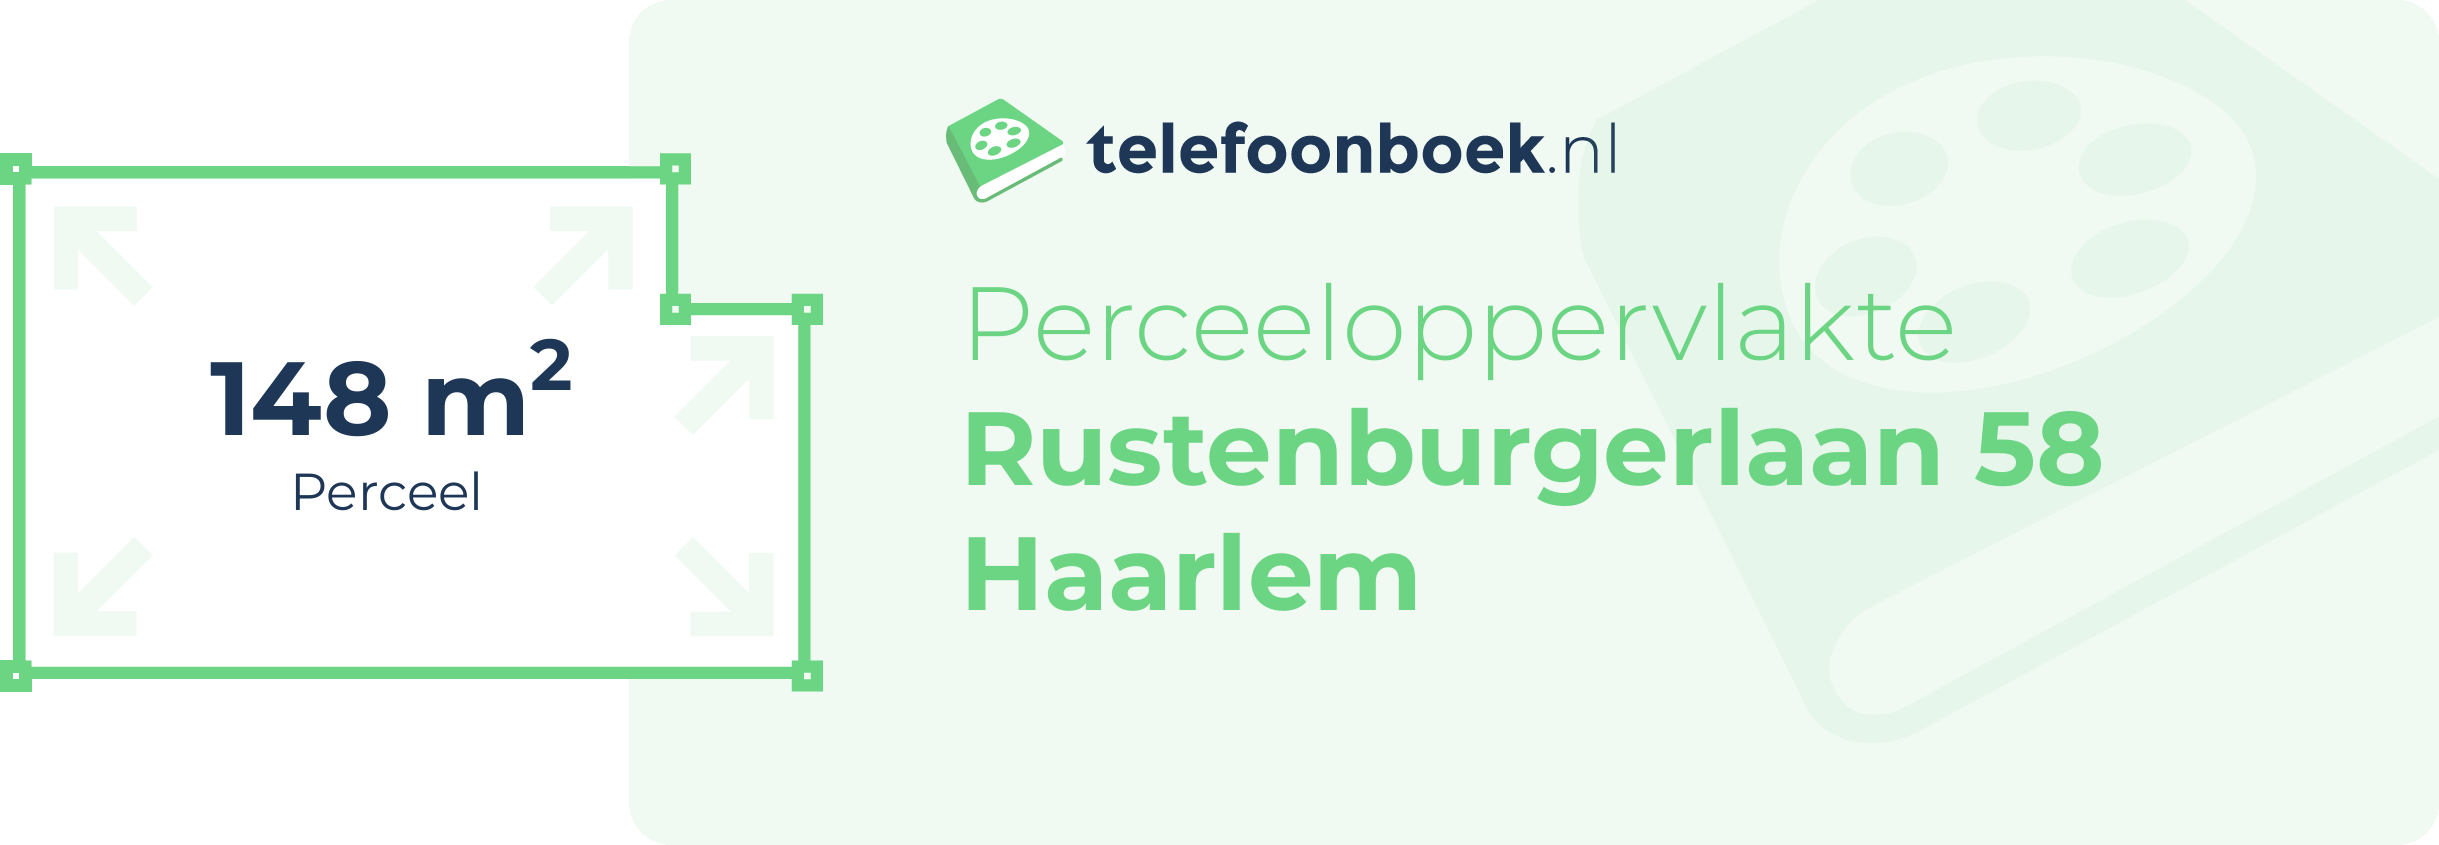 Perceeloppervlakte Rustenburgerlaan 58 Haarlem